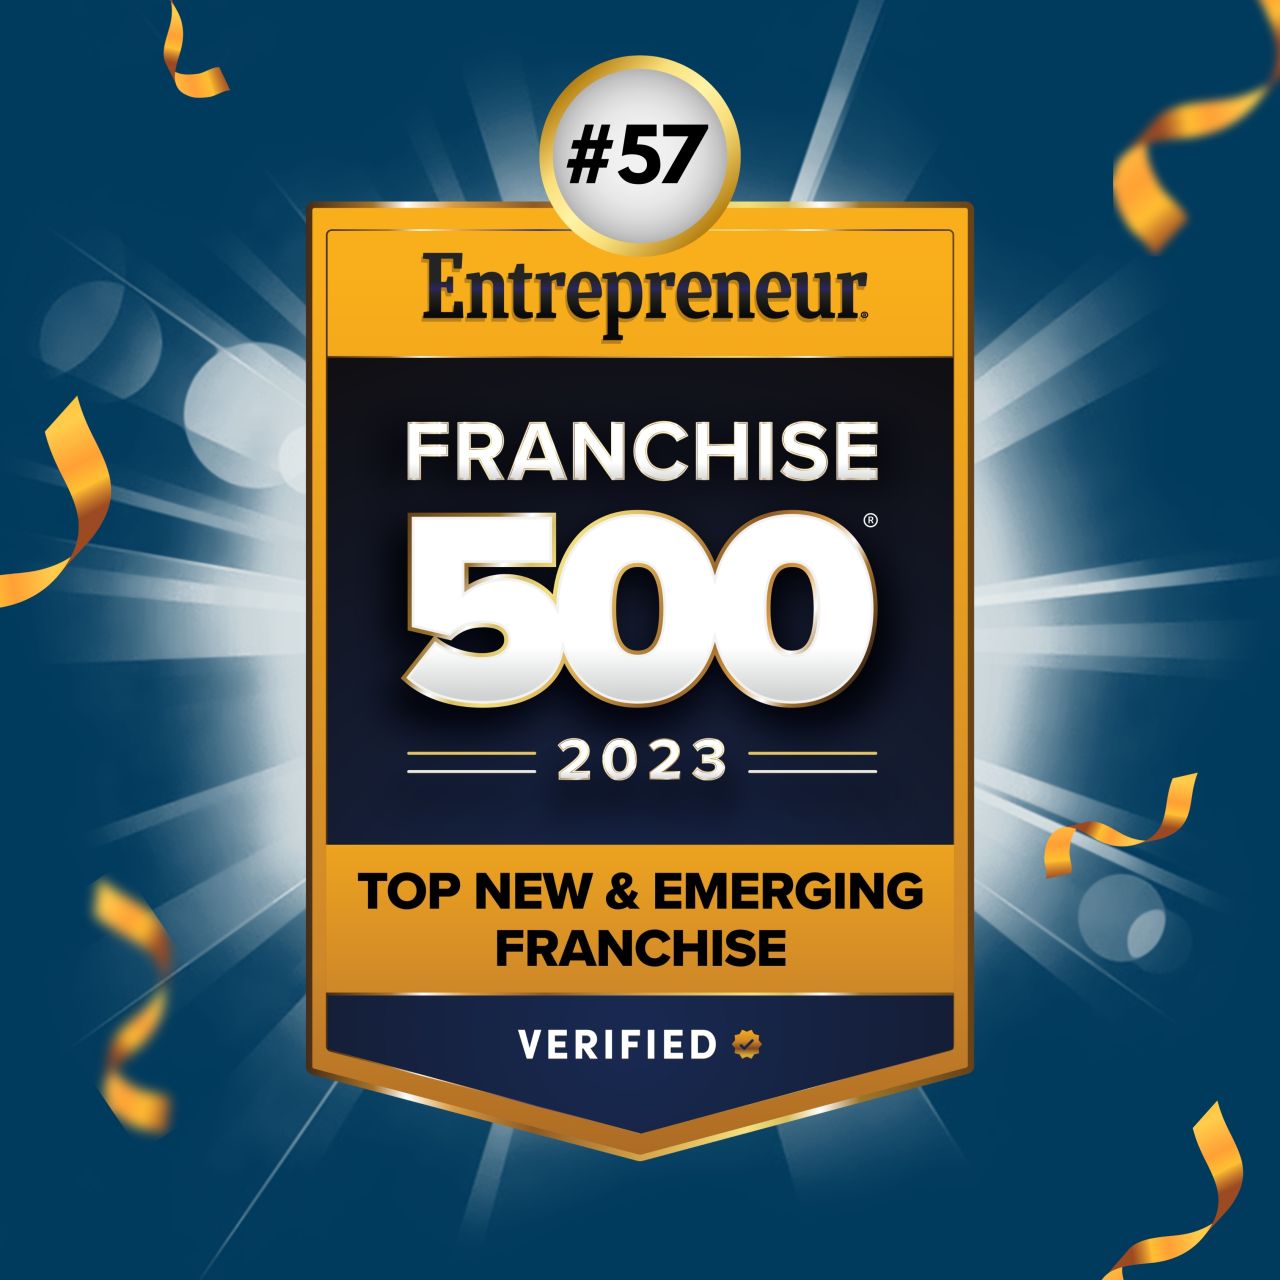 franchise 500